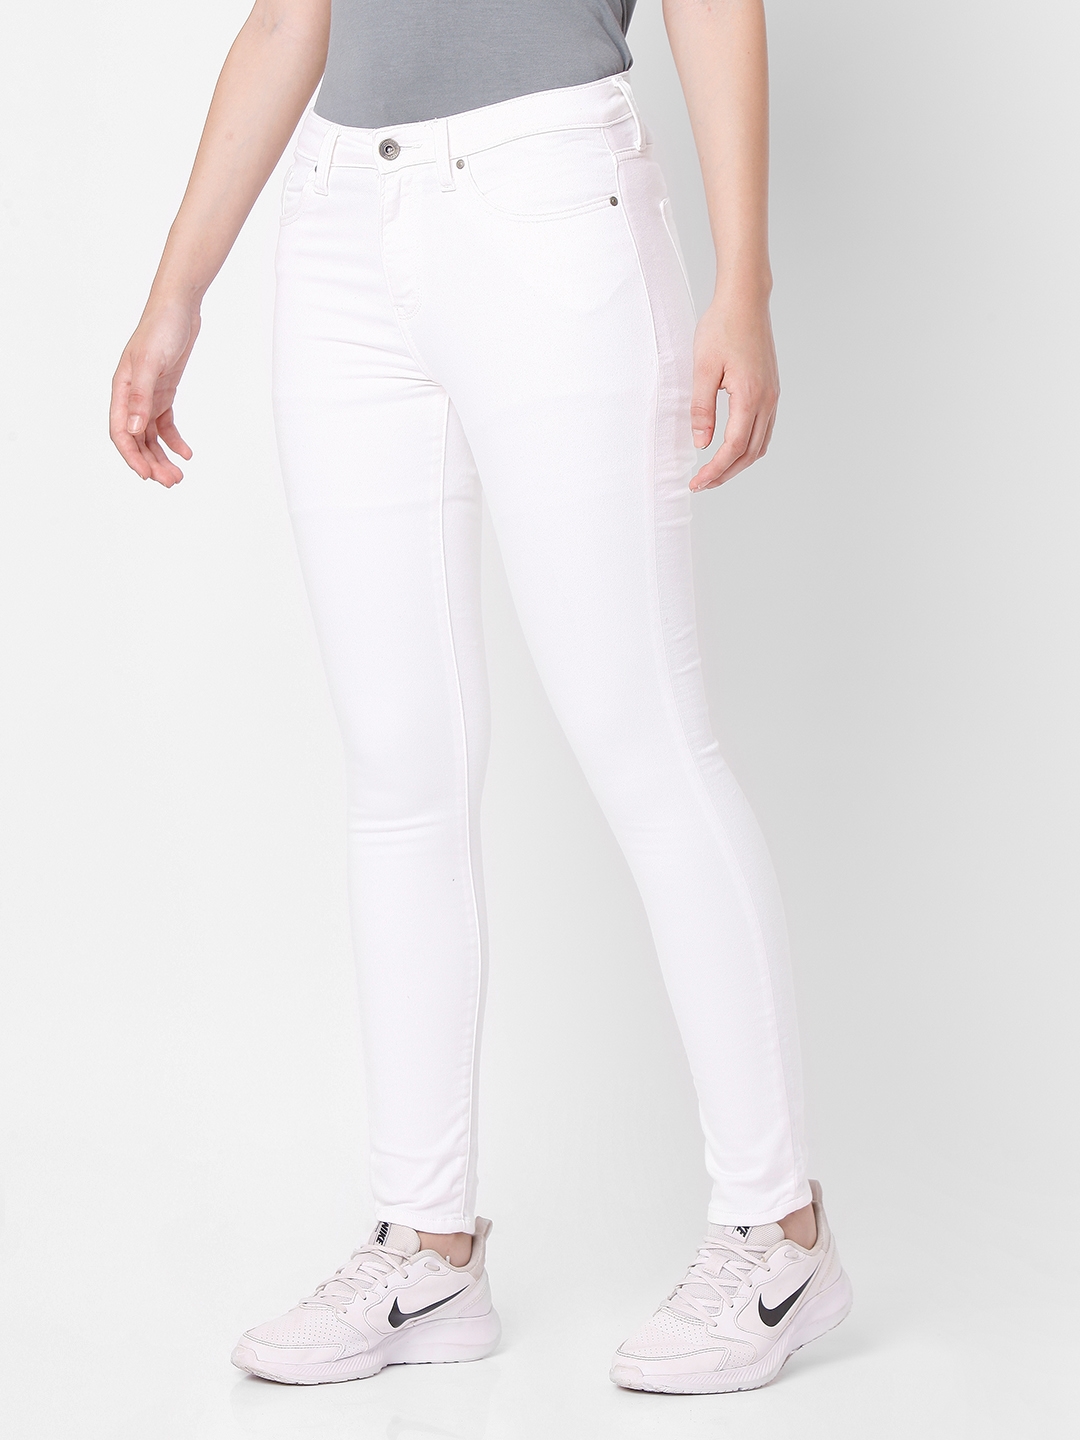 spykar | Women's White Cotton Solid Skinny Jeans 1